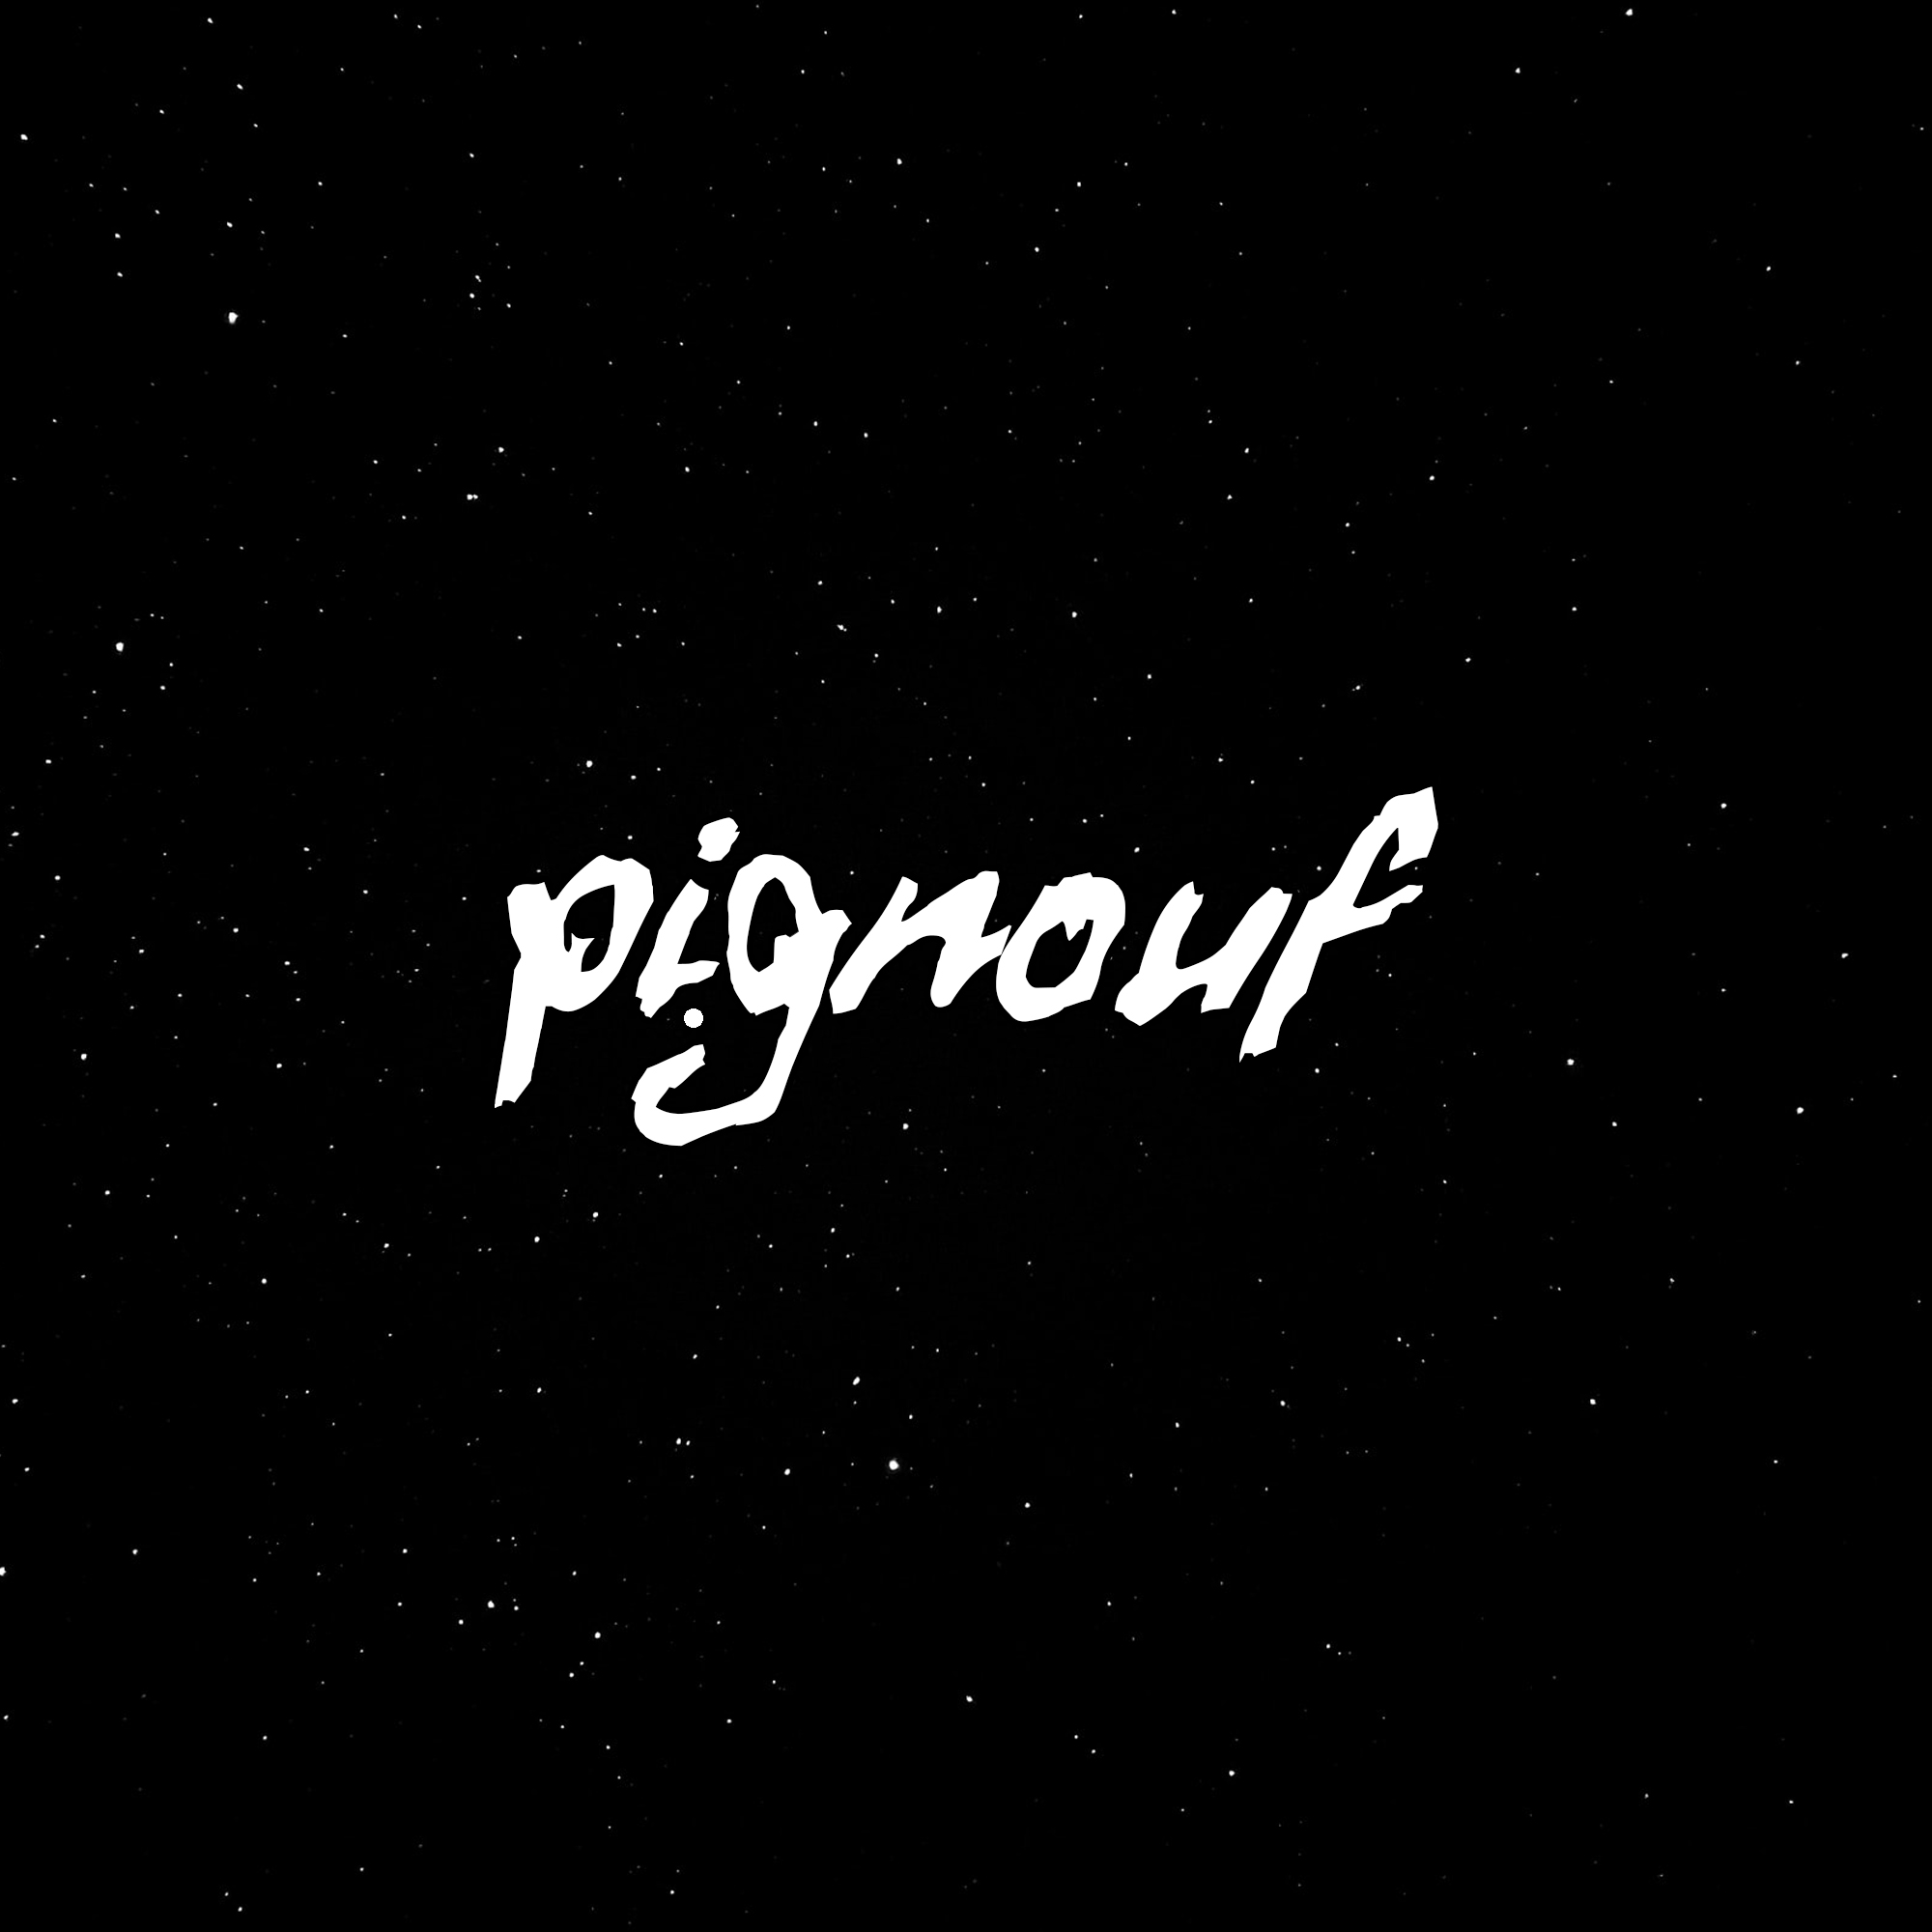 Pignouf team logo